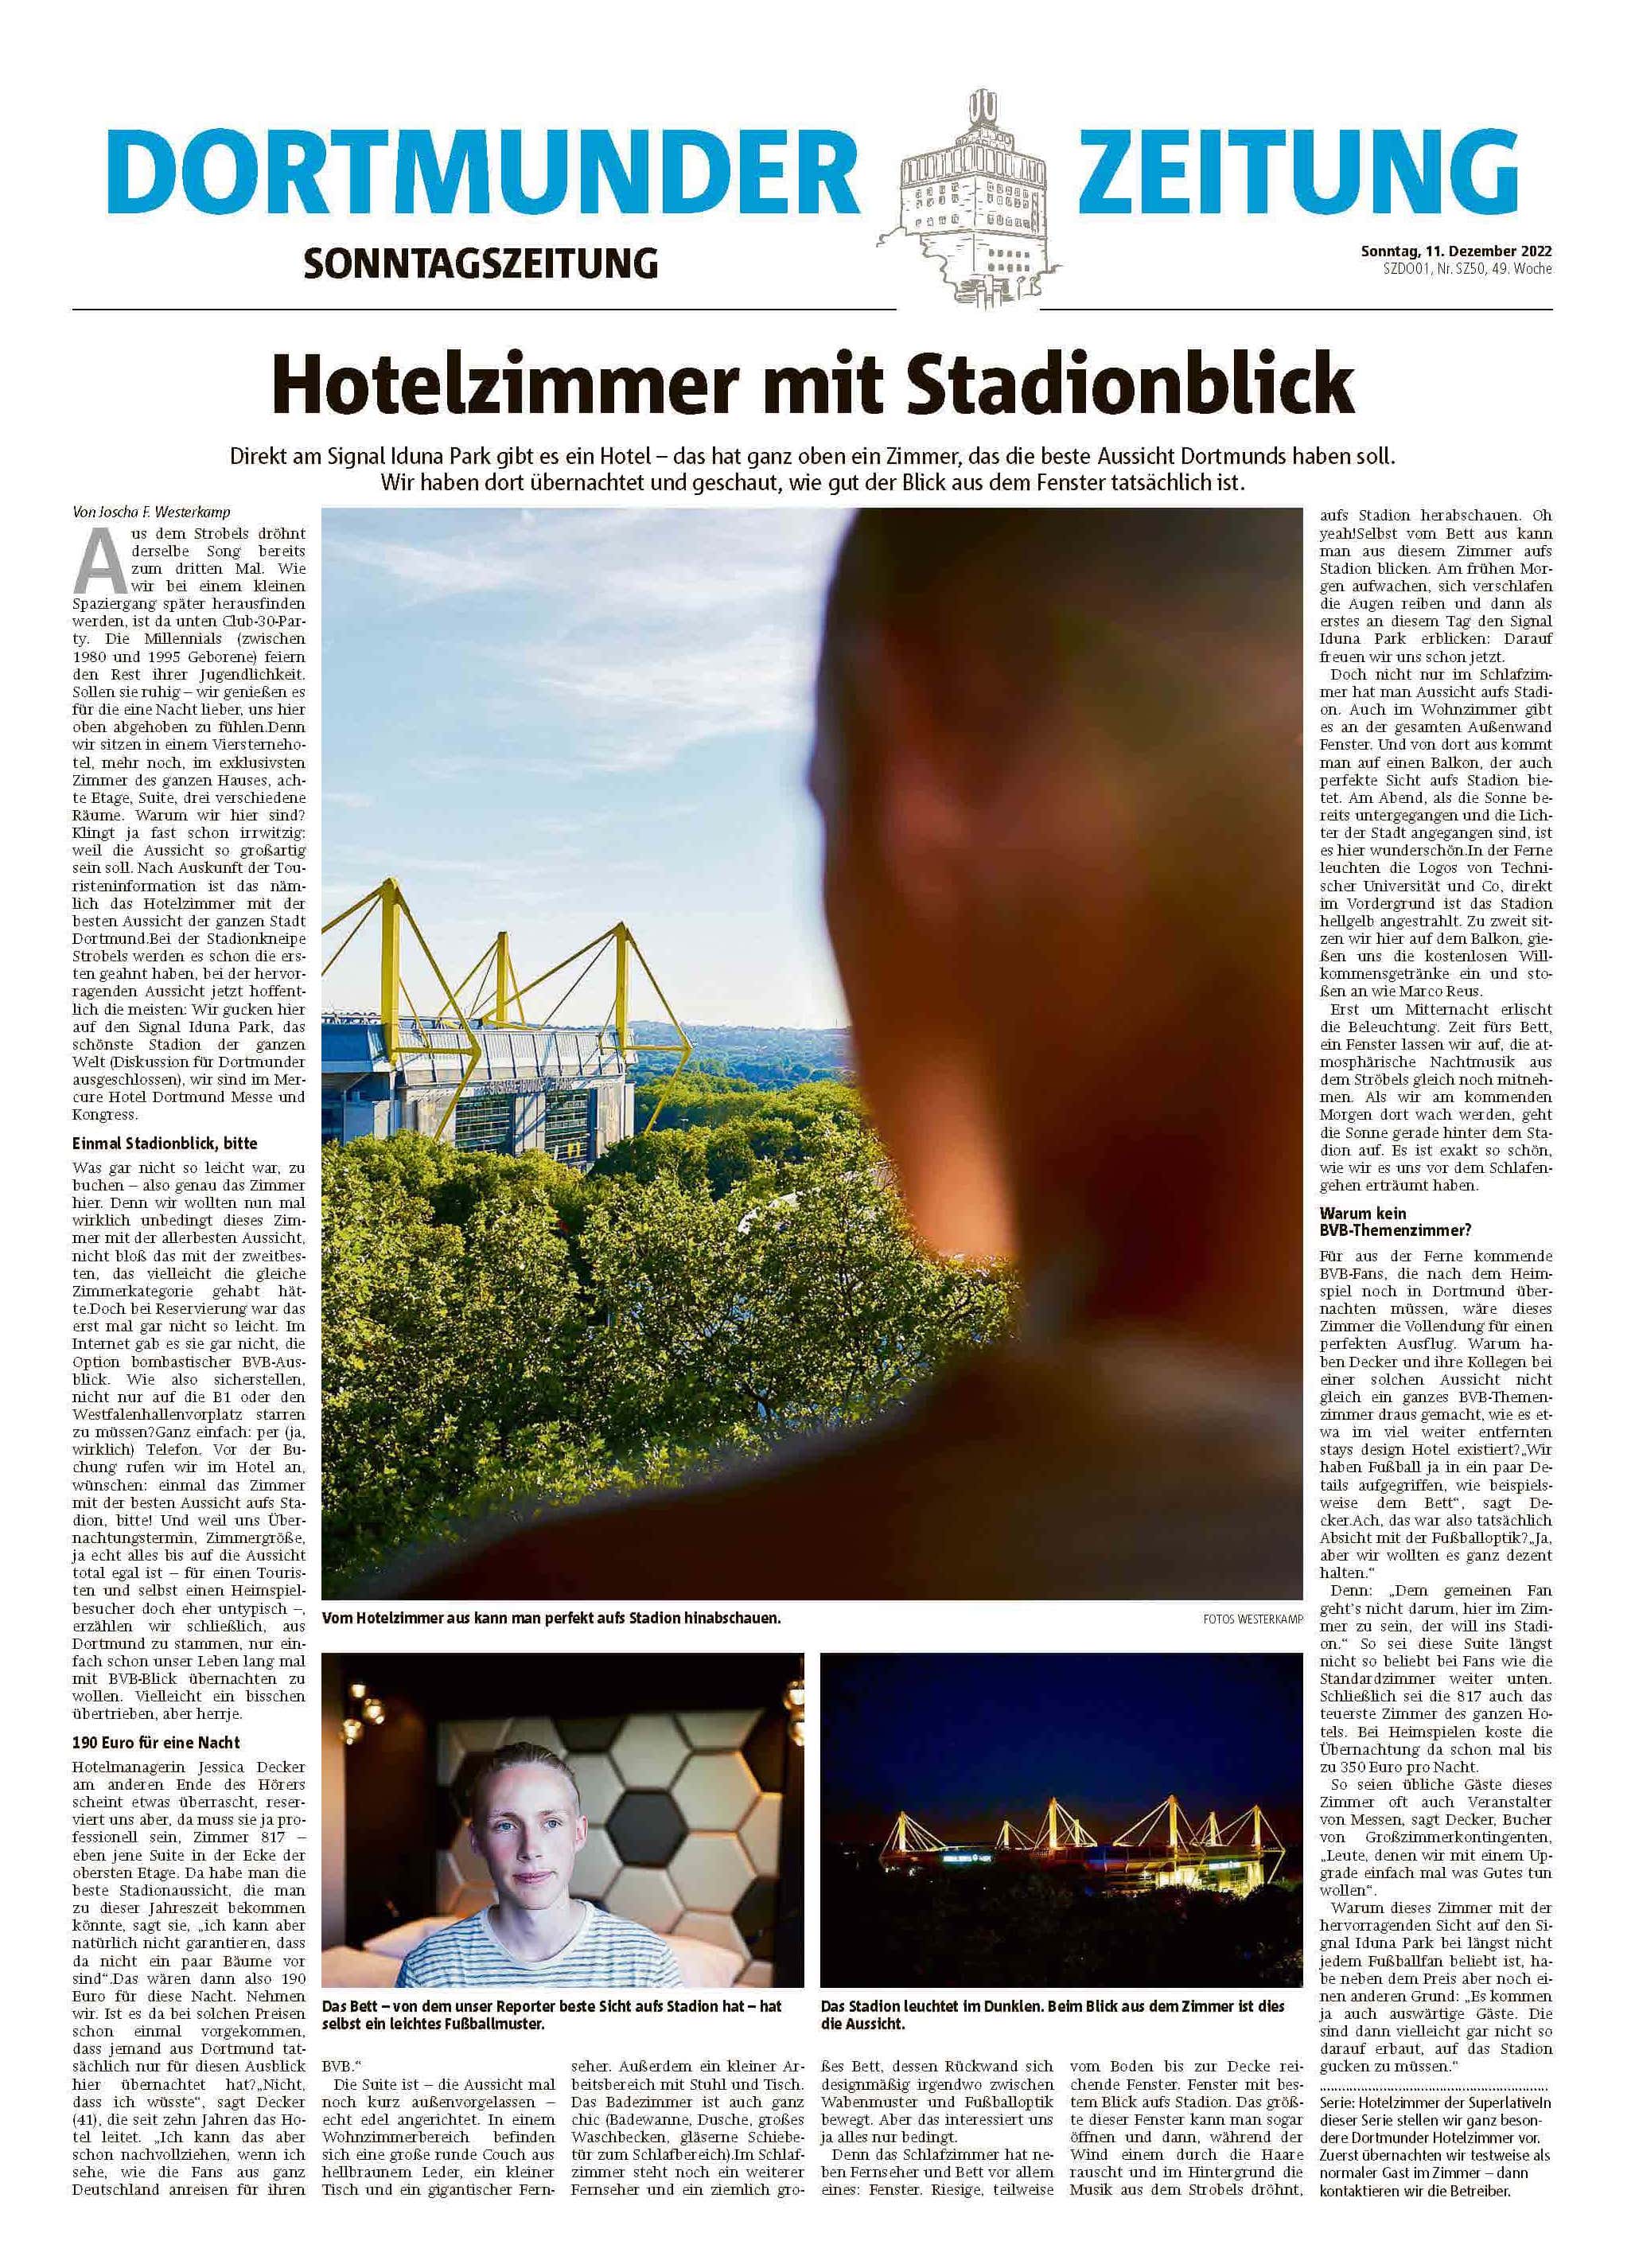 Zeitung-Artikel aus den Ruhr-Nachrichten – Joscha F. Westerkamp